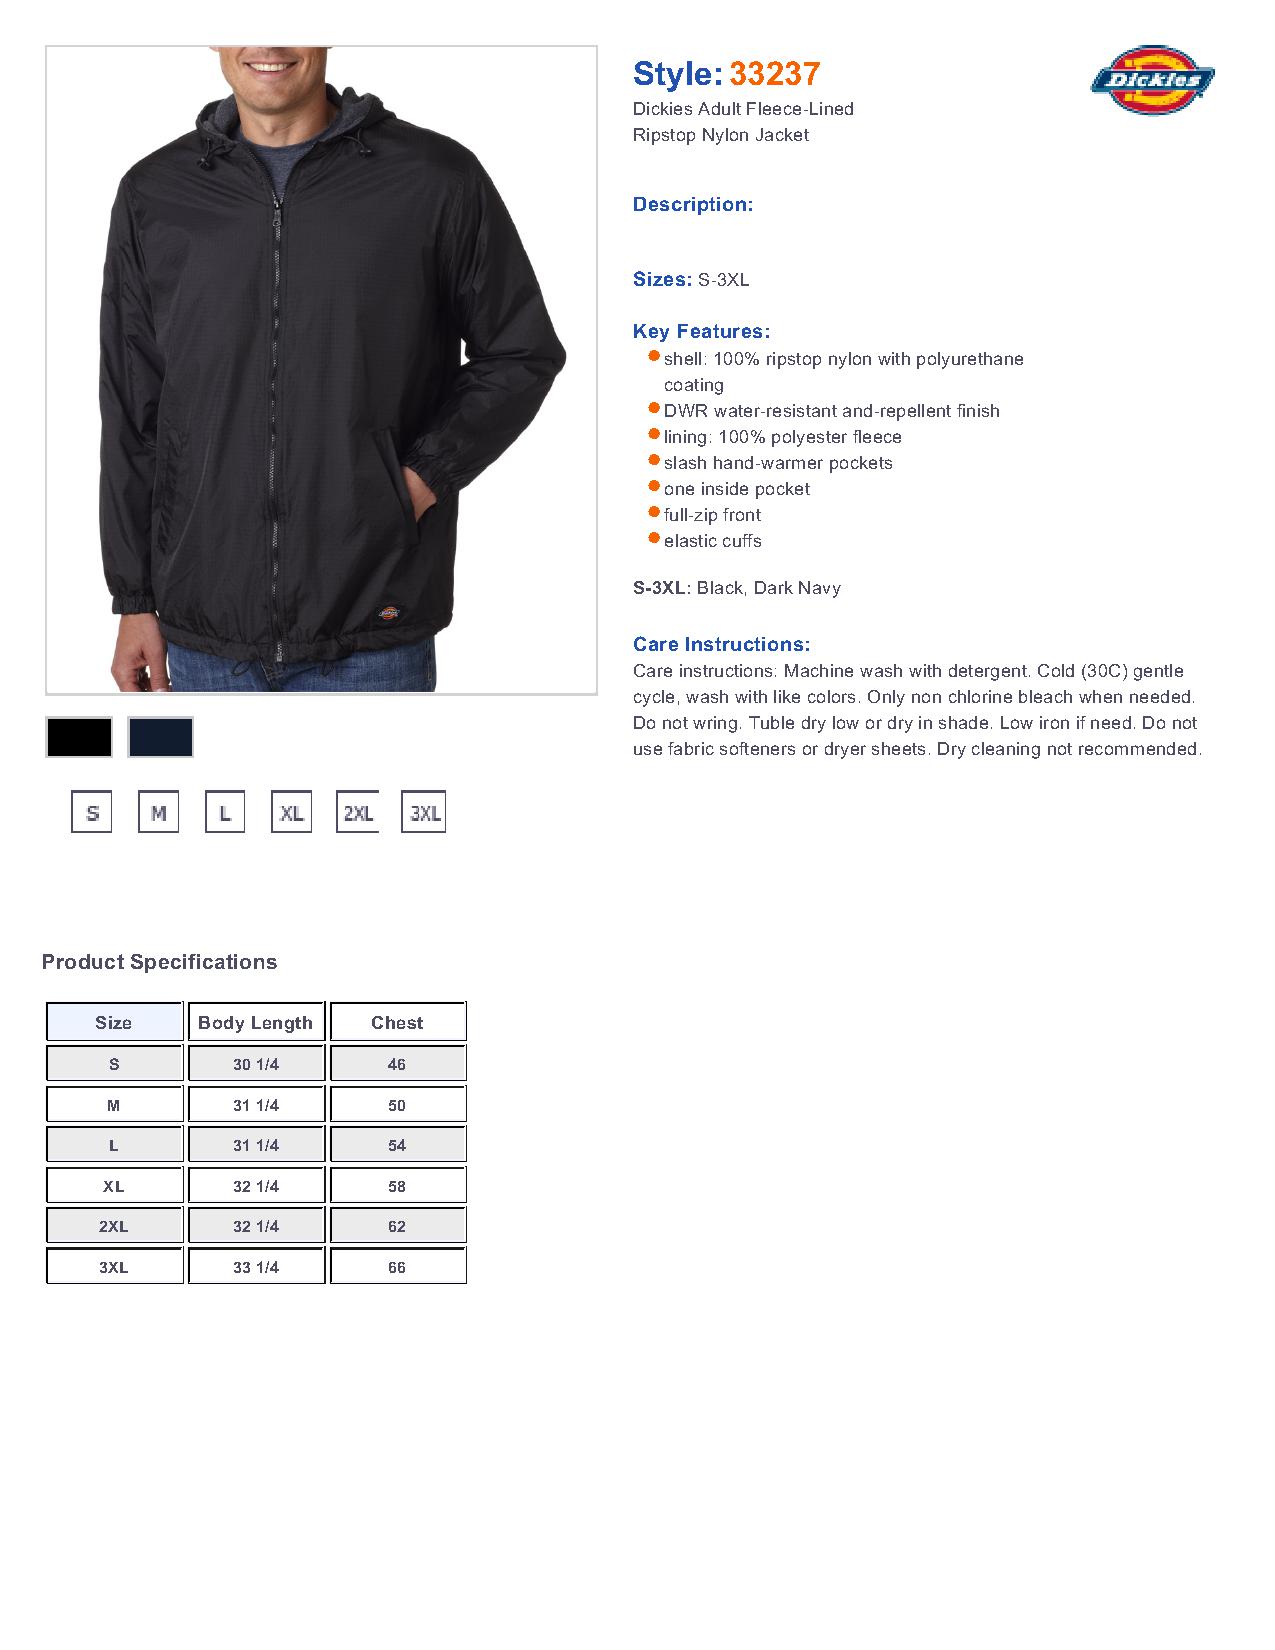 Dickies 33237 - Adult Fleece-Lined Rip Stop Jacket $32.94